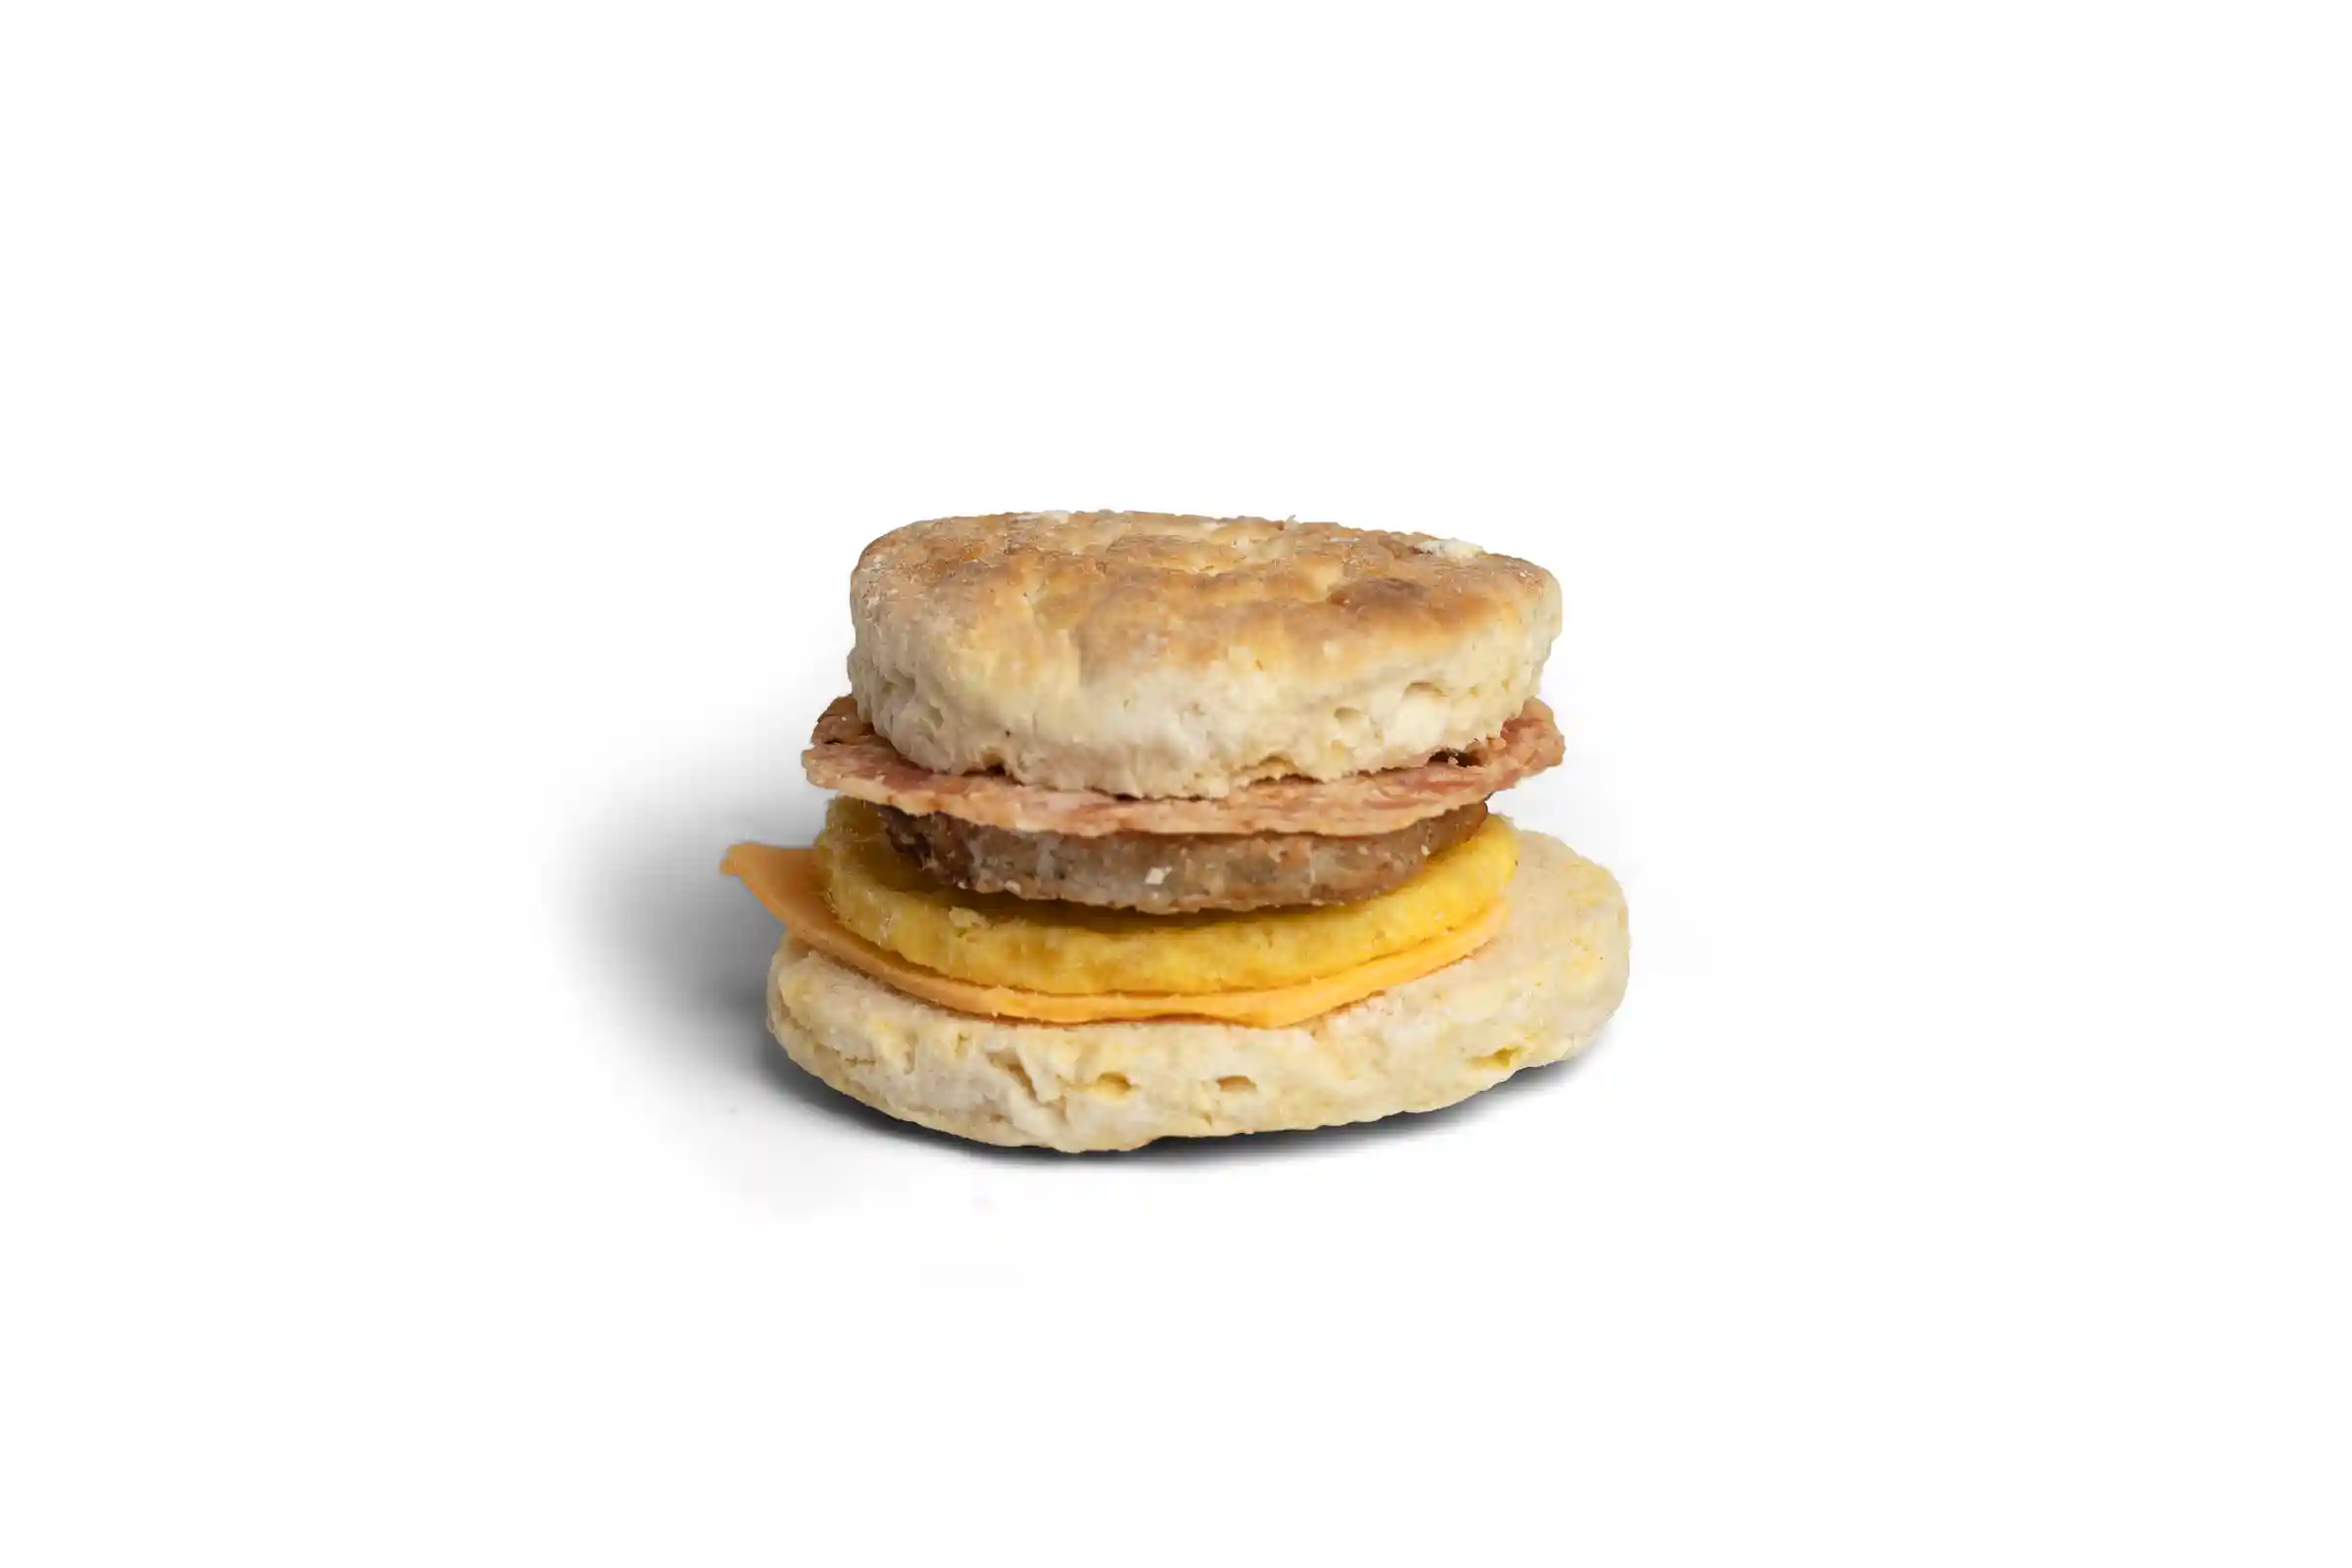 BIG AZ® Biscuit Stacker® Sausage, Bacon, Egg And Cheese Biscuit Sandwichhttps://images.salsify.com/image/upload/s--m-5uucmw--/q_25/who4ksgcfruwd2kunupf.webp